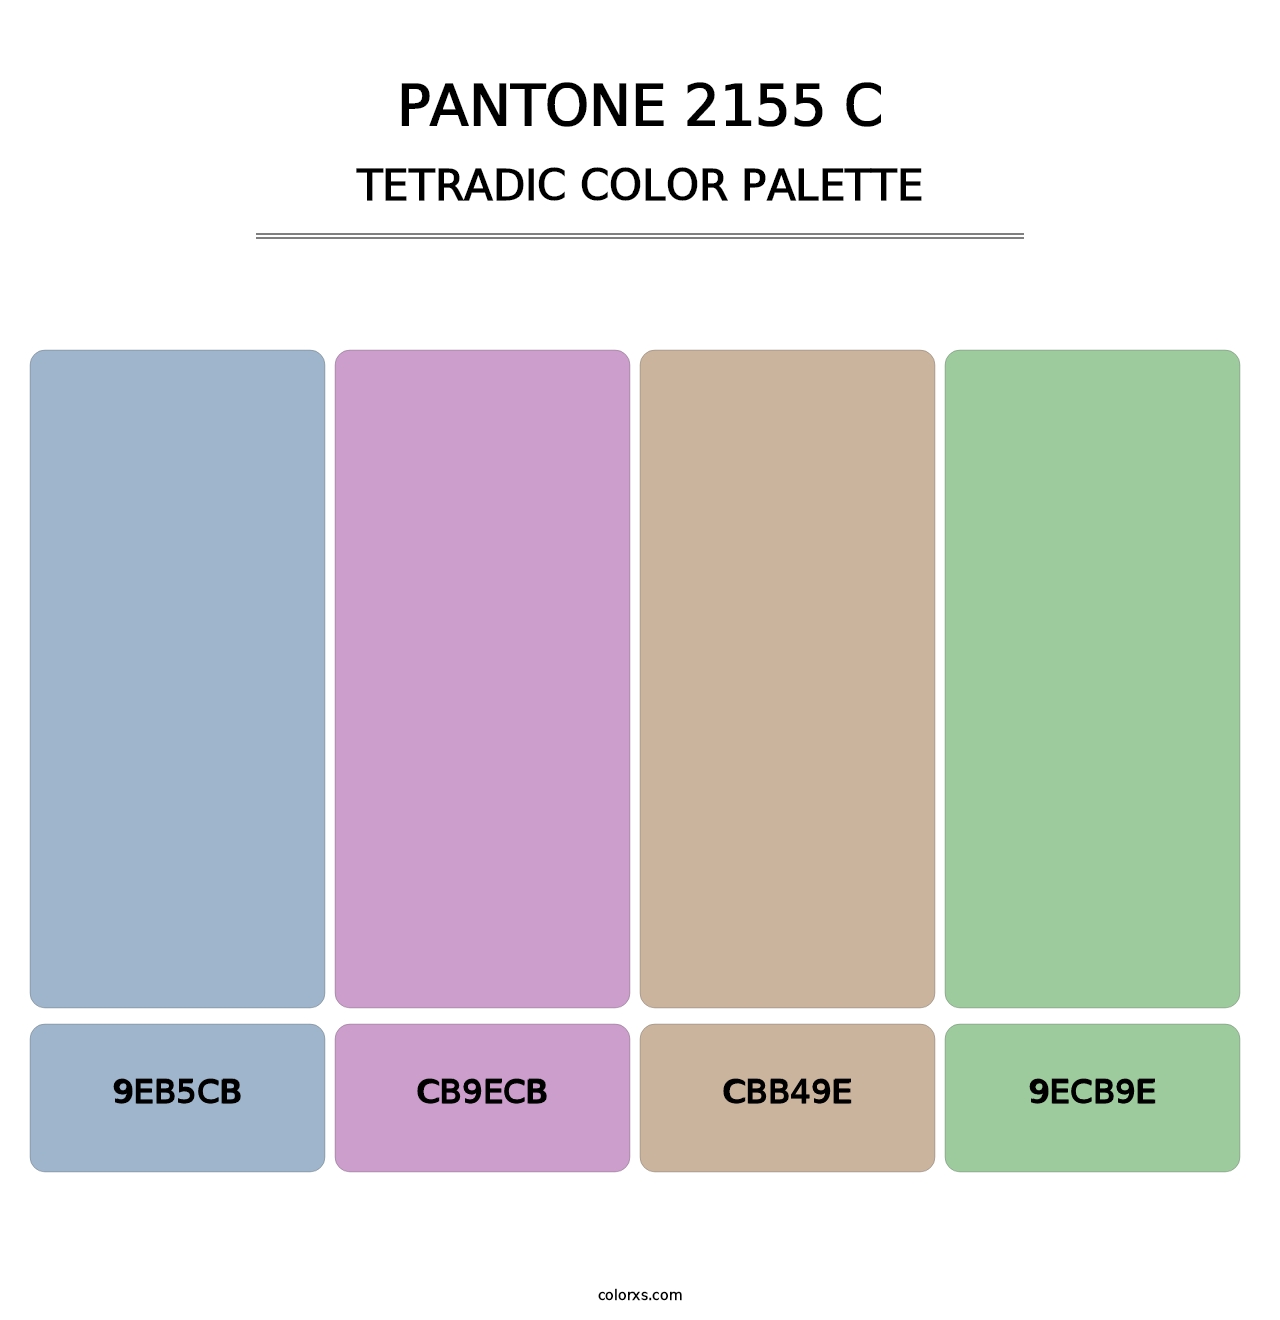 PANTONE 2155 C - Tetradic Color Palette